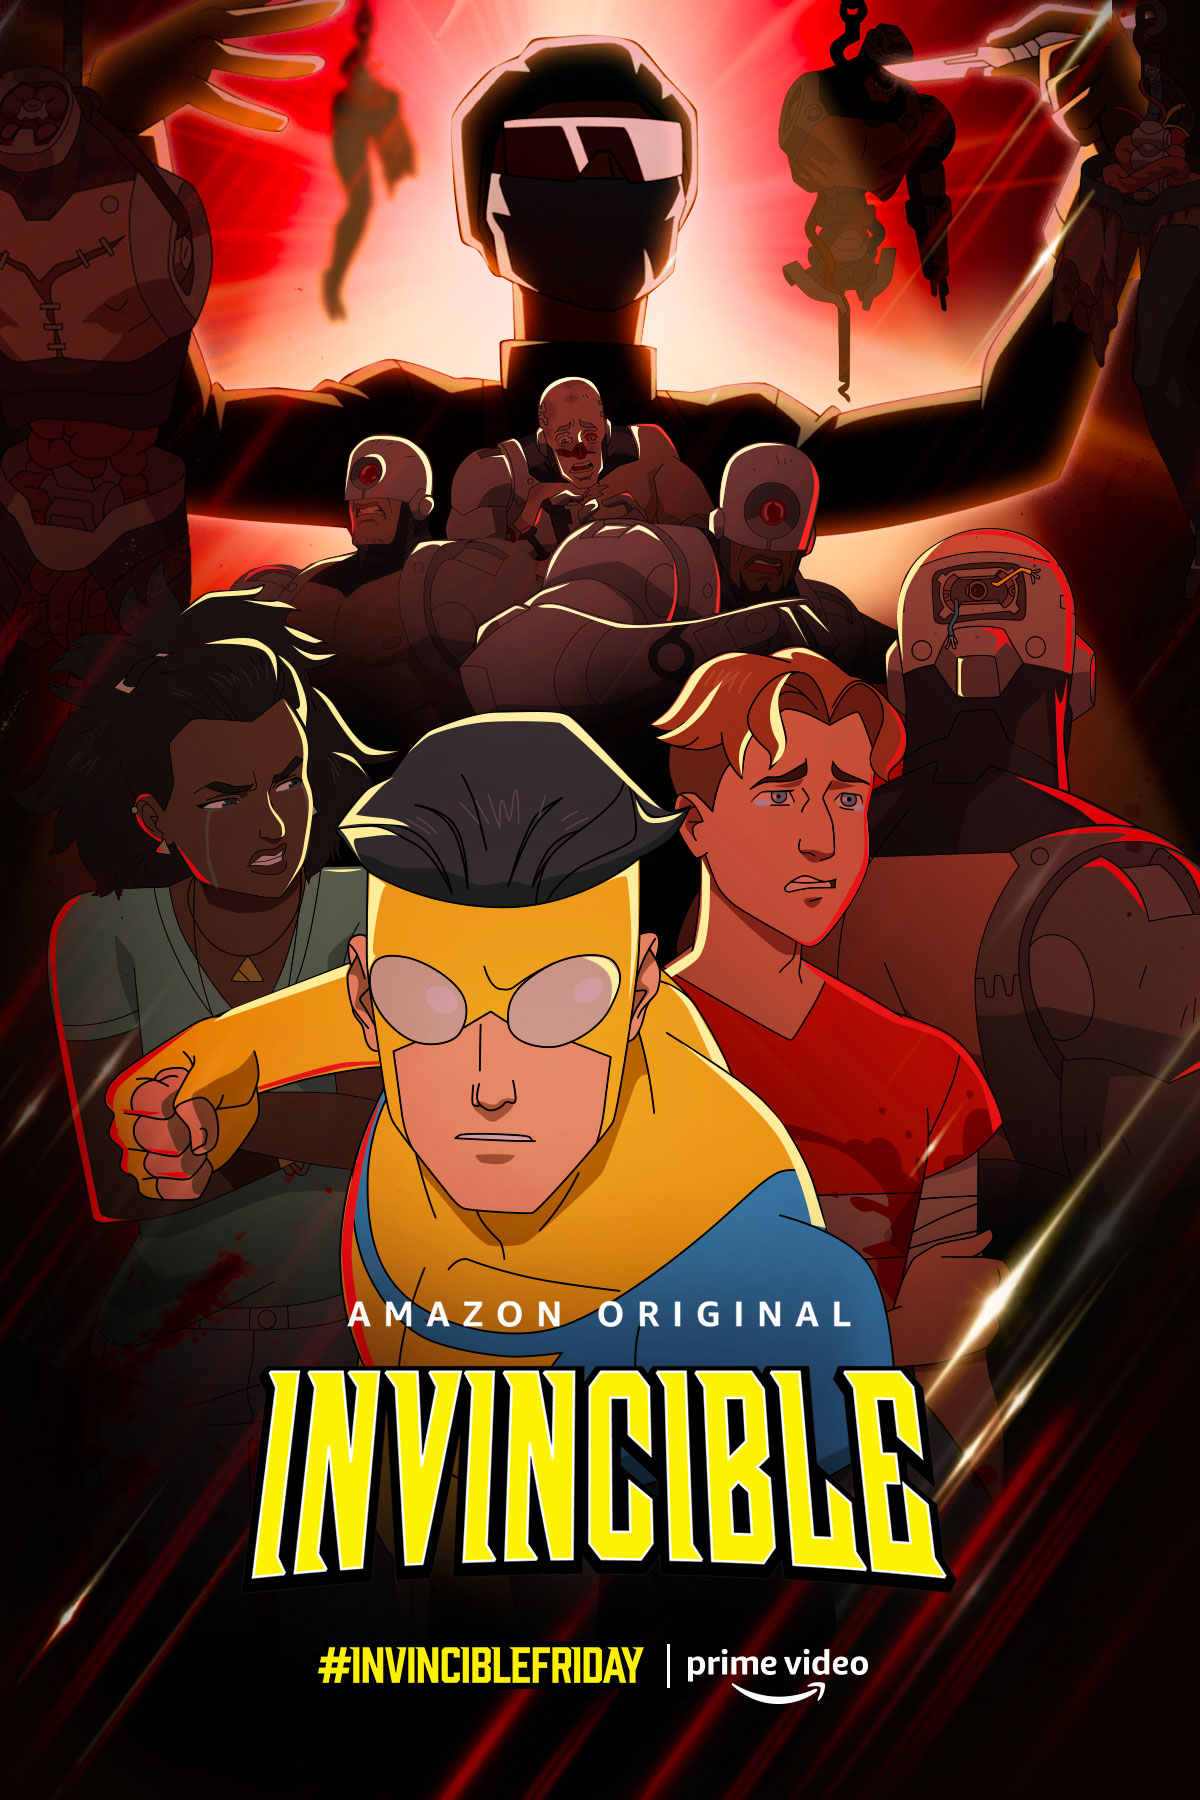 Invincible: Season 1, Episode 6 Review - You Look Kinda Dead